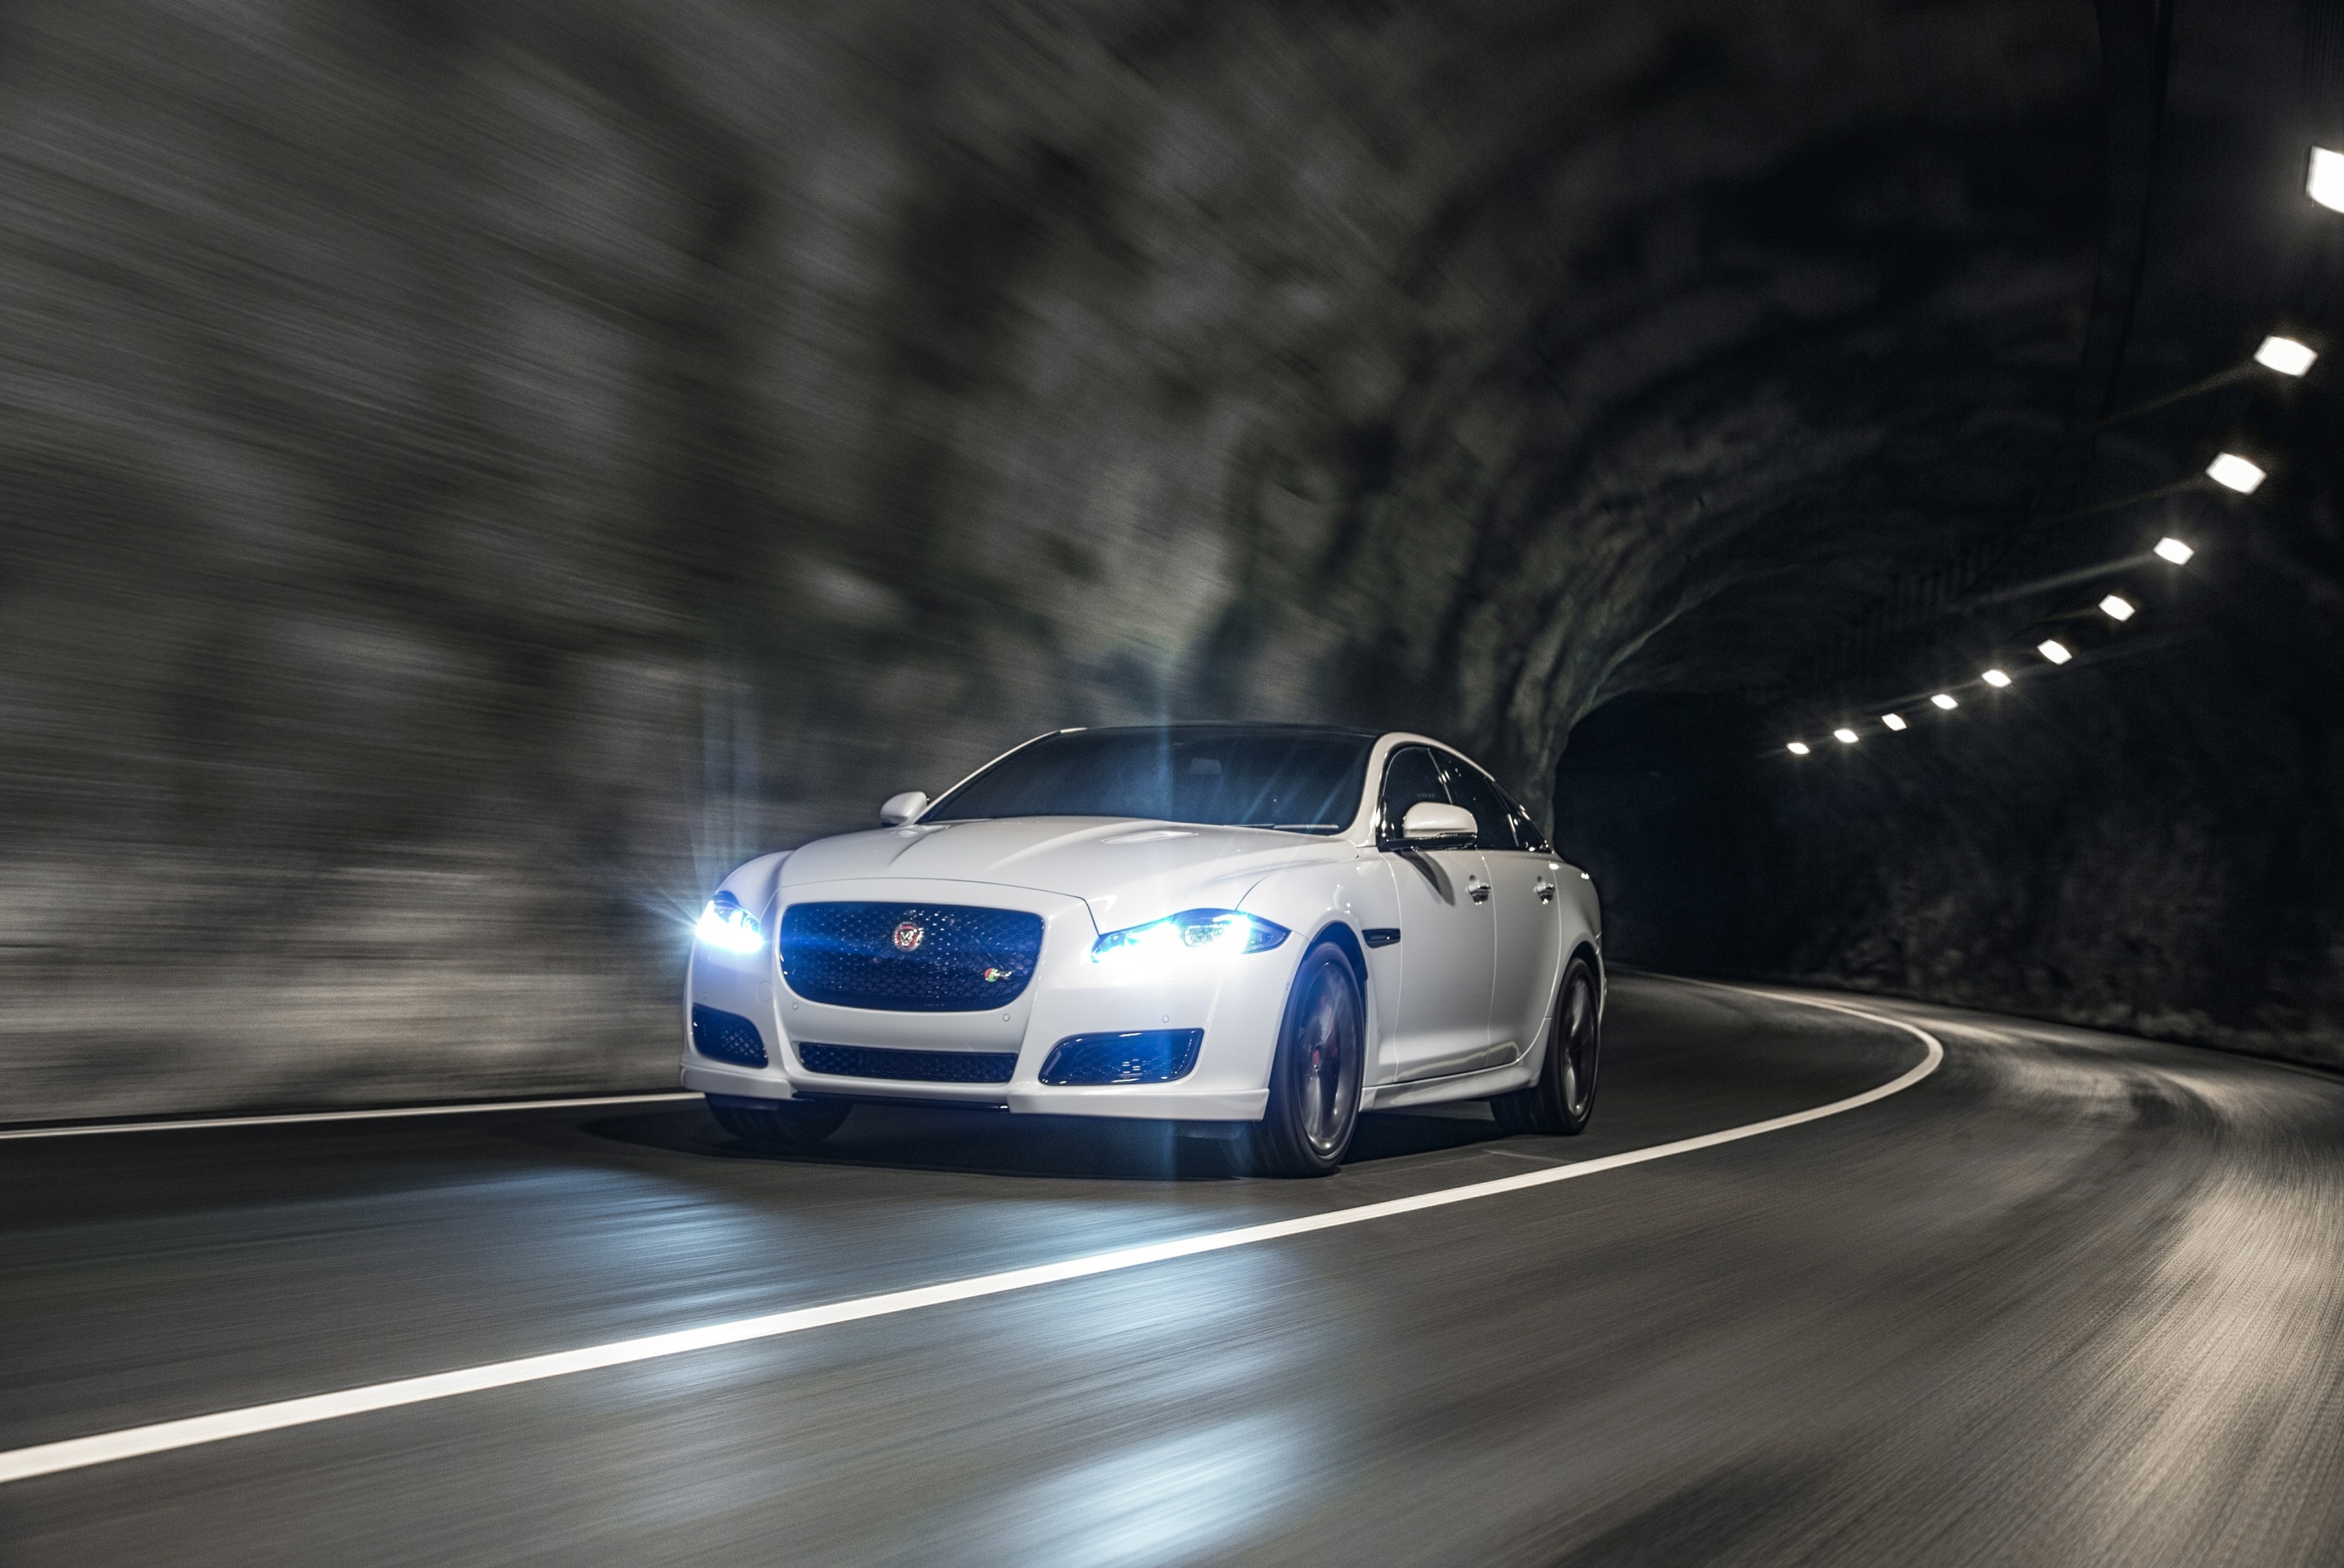 Download 3609x2414 Jaguar Xj, Tunnel, White, Luxury, Cars Wallpaper